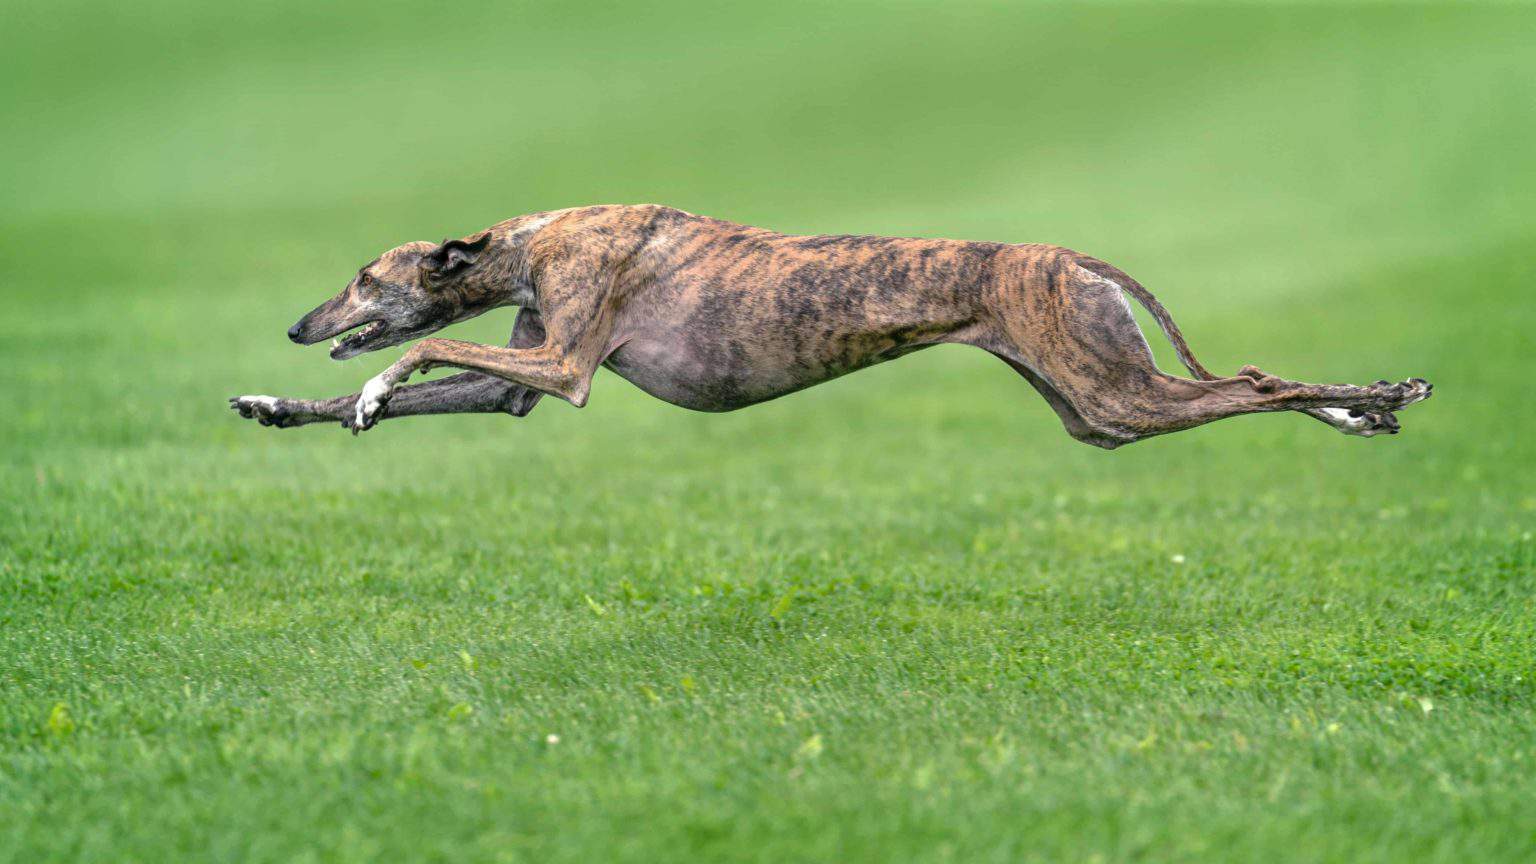 Fastest dog breeds Greyhound, Dalmatian, Whippet, Saluki